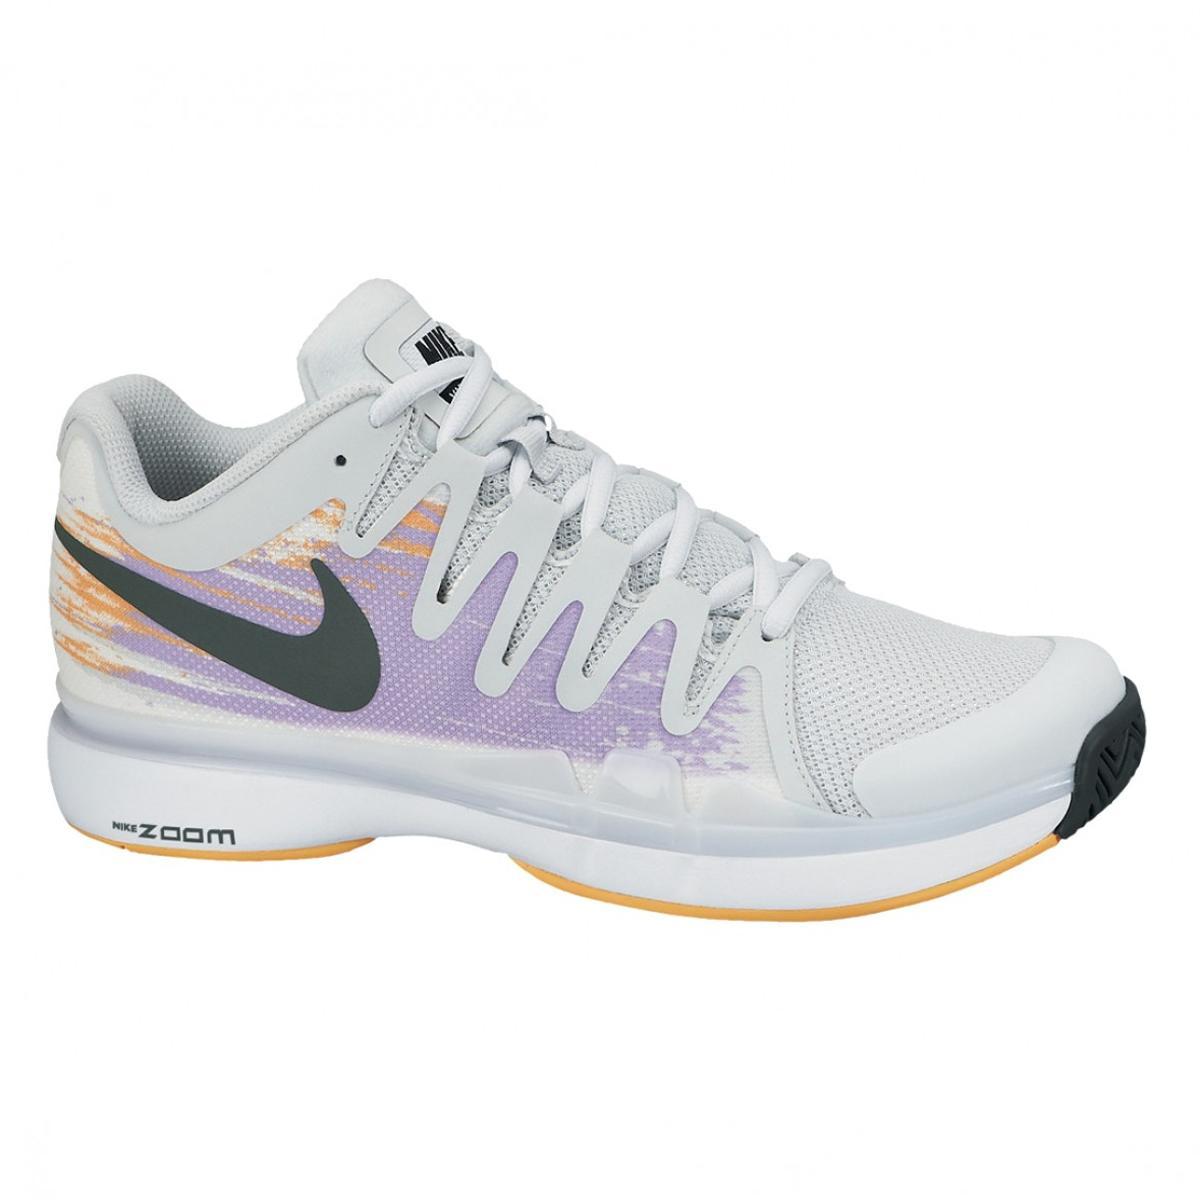 Nike Womens Vapor Tour Tennis Shoes - Grey/Urban Lilac -